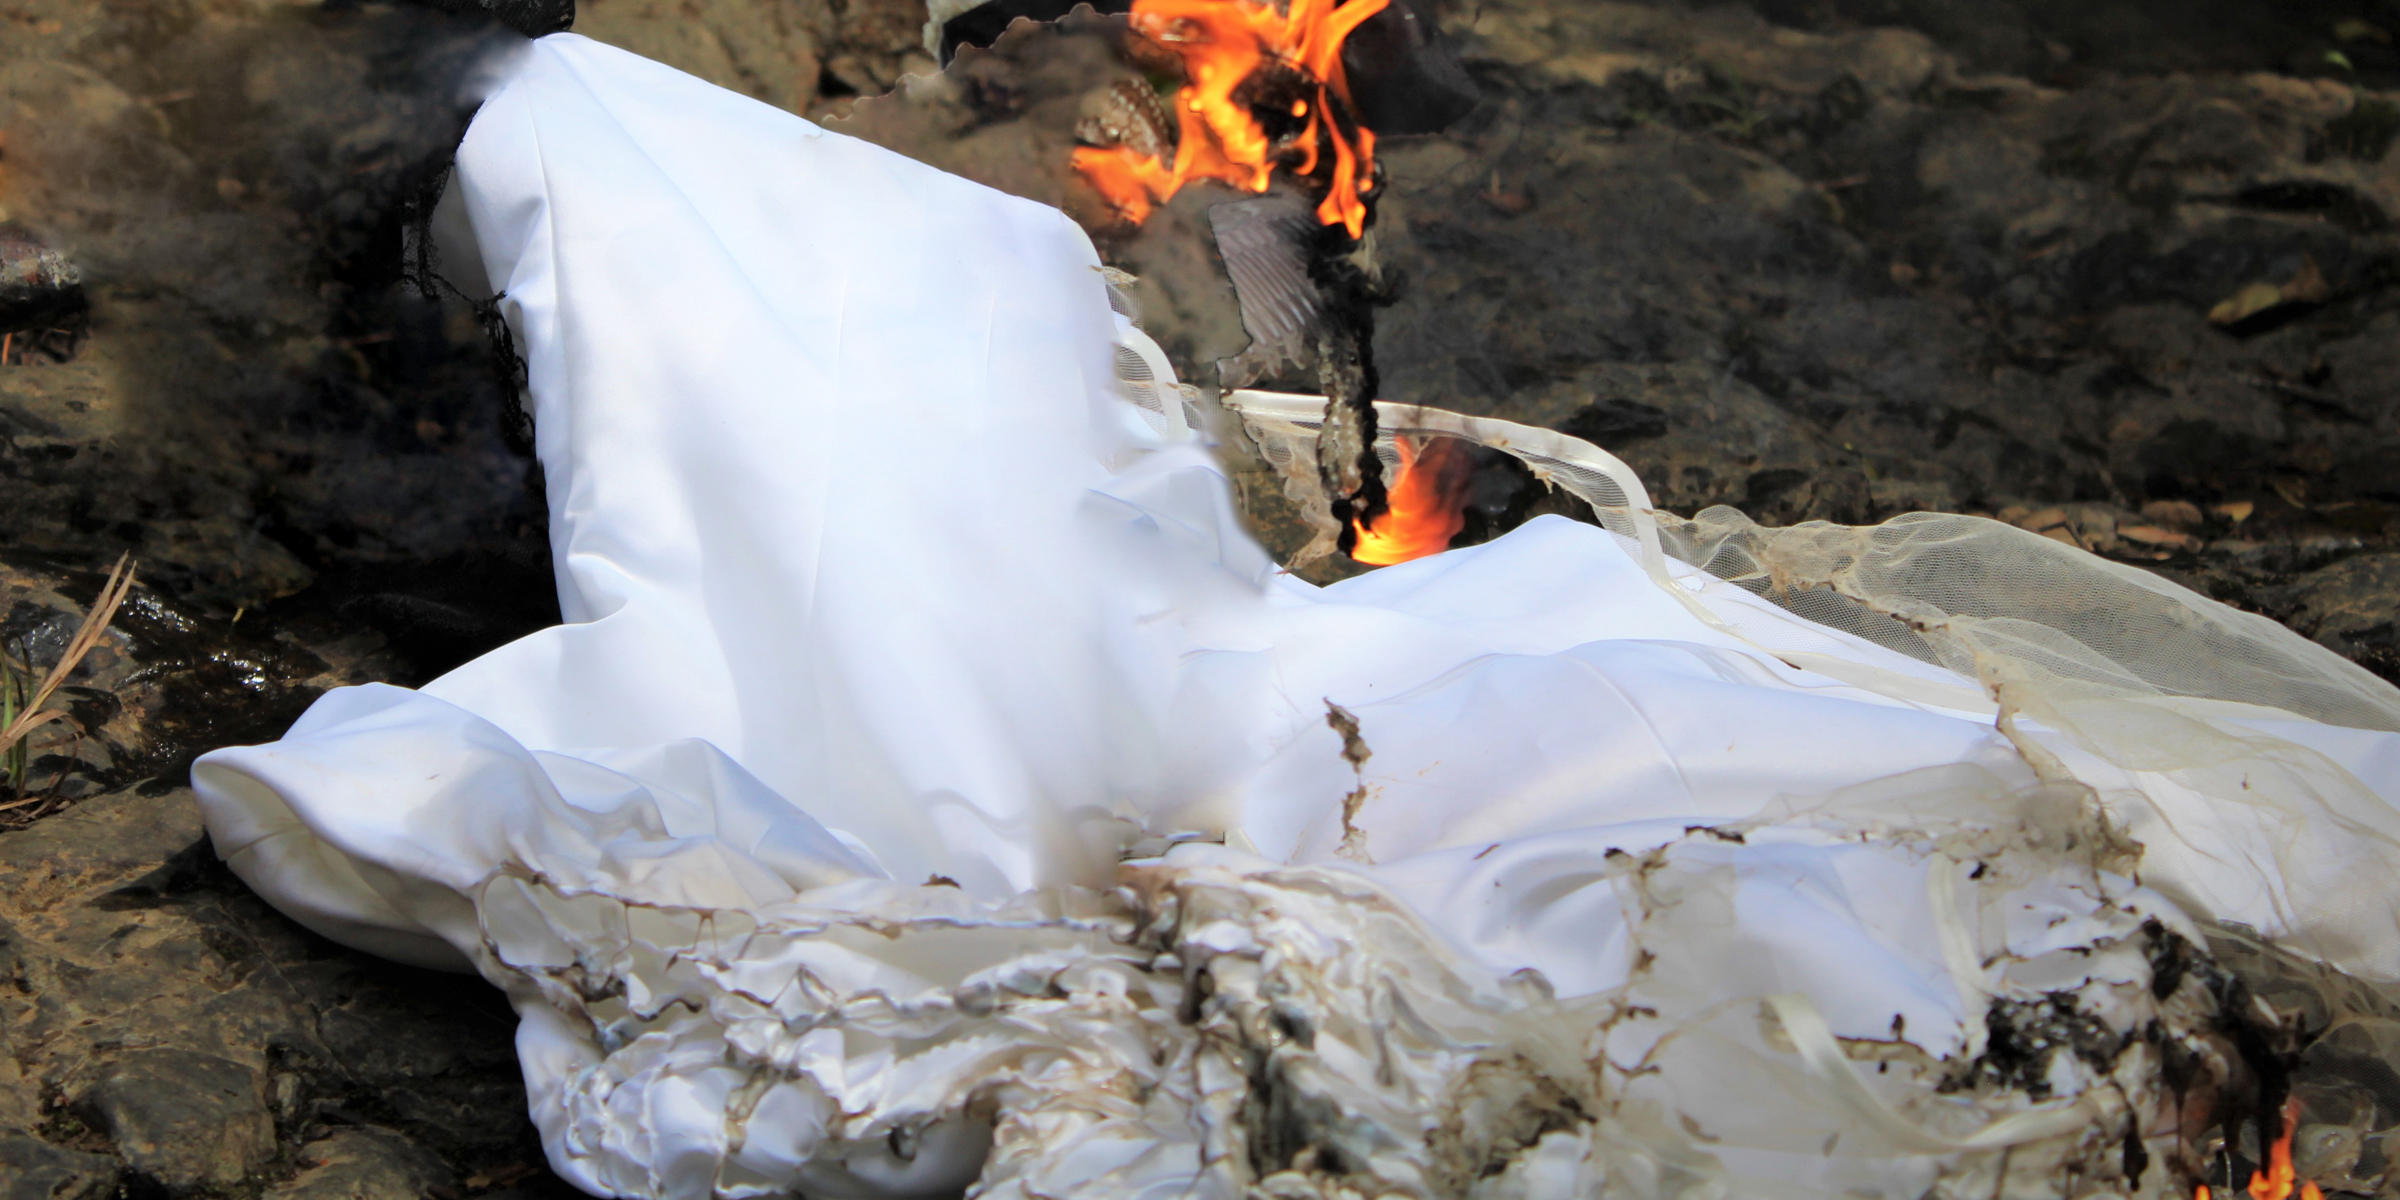 Burning wedding dress | Source: Shutterstock